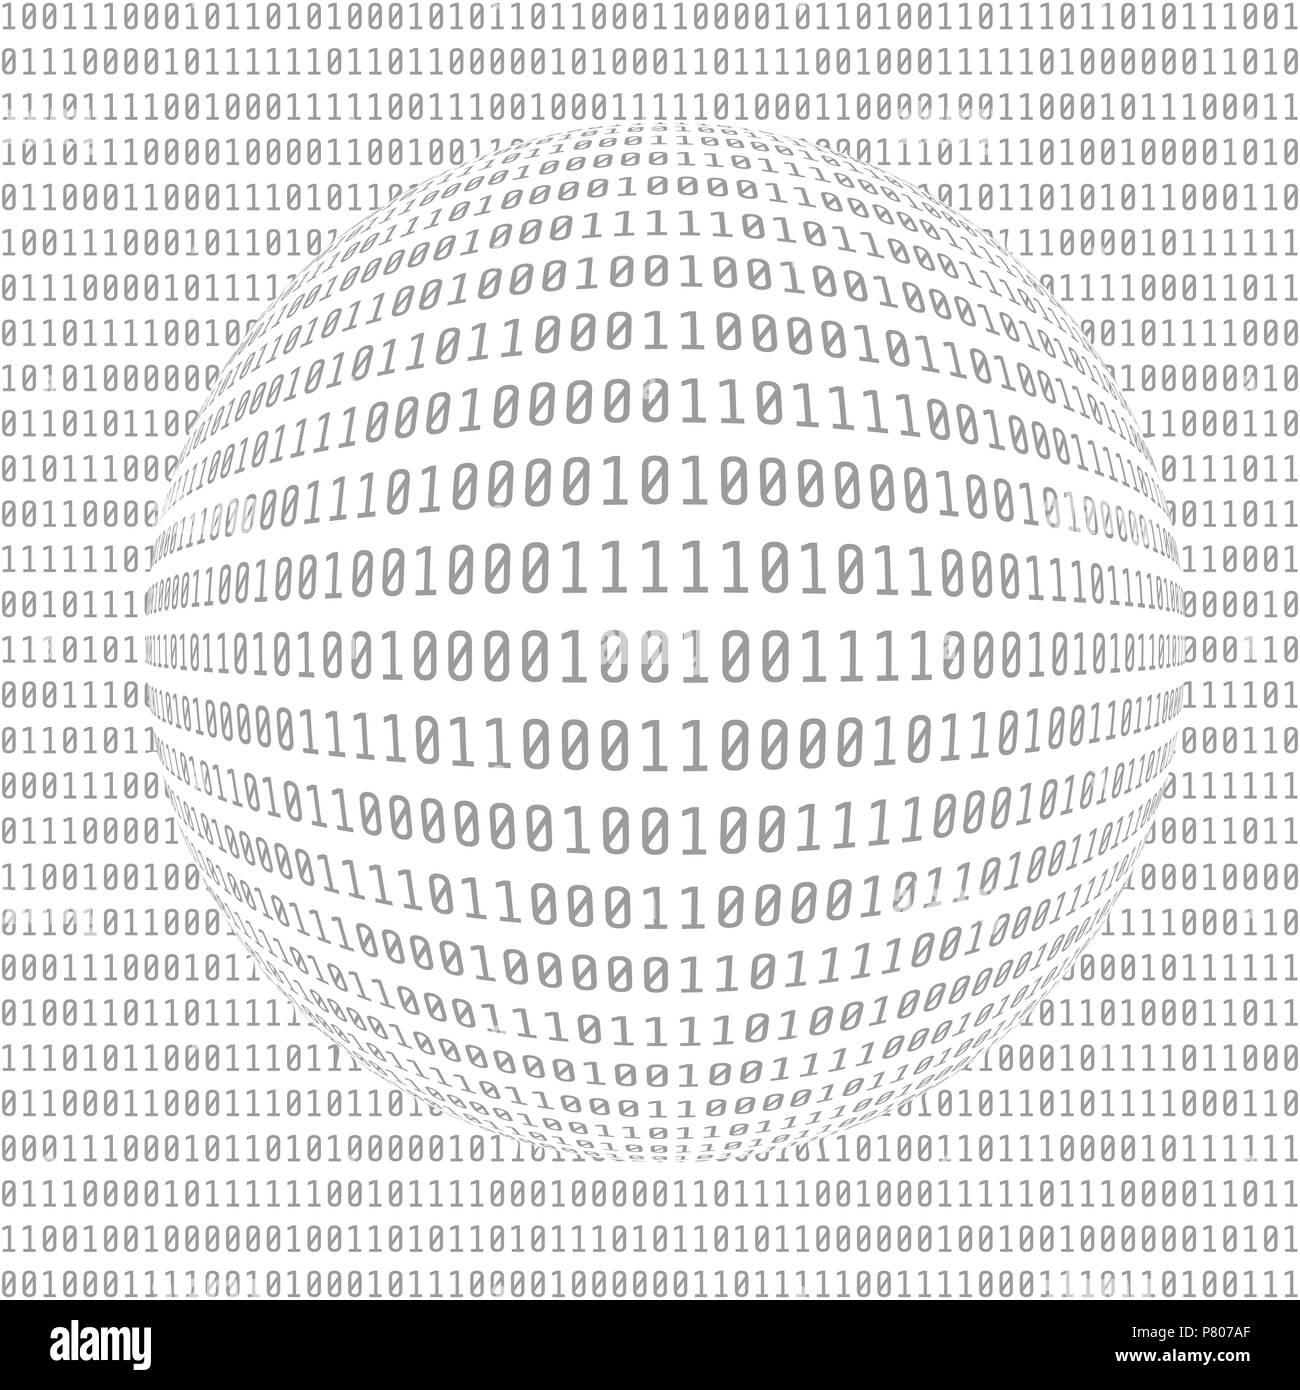 Binary Computer Code. Digital Data. Abstract Matrix Background.  Hacker concept. Vector Illustration Stock Vector